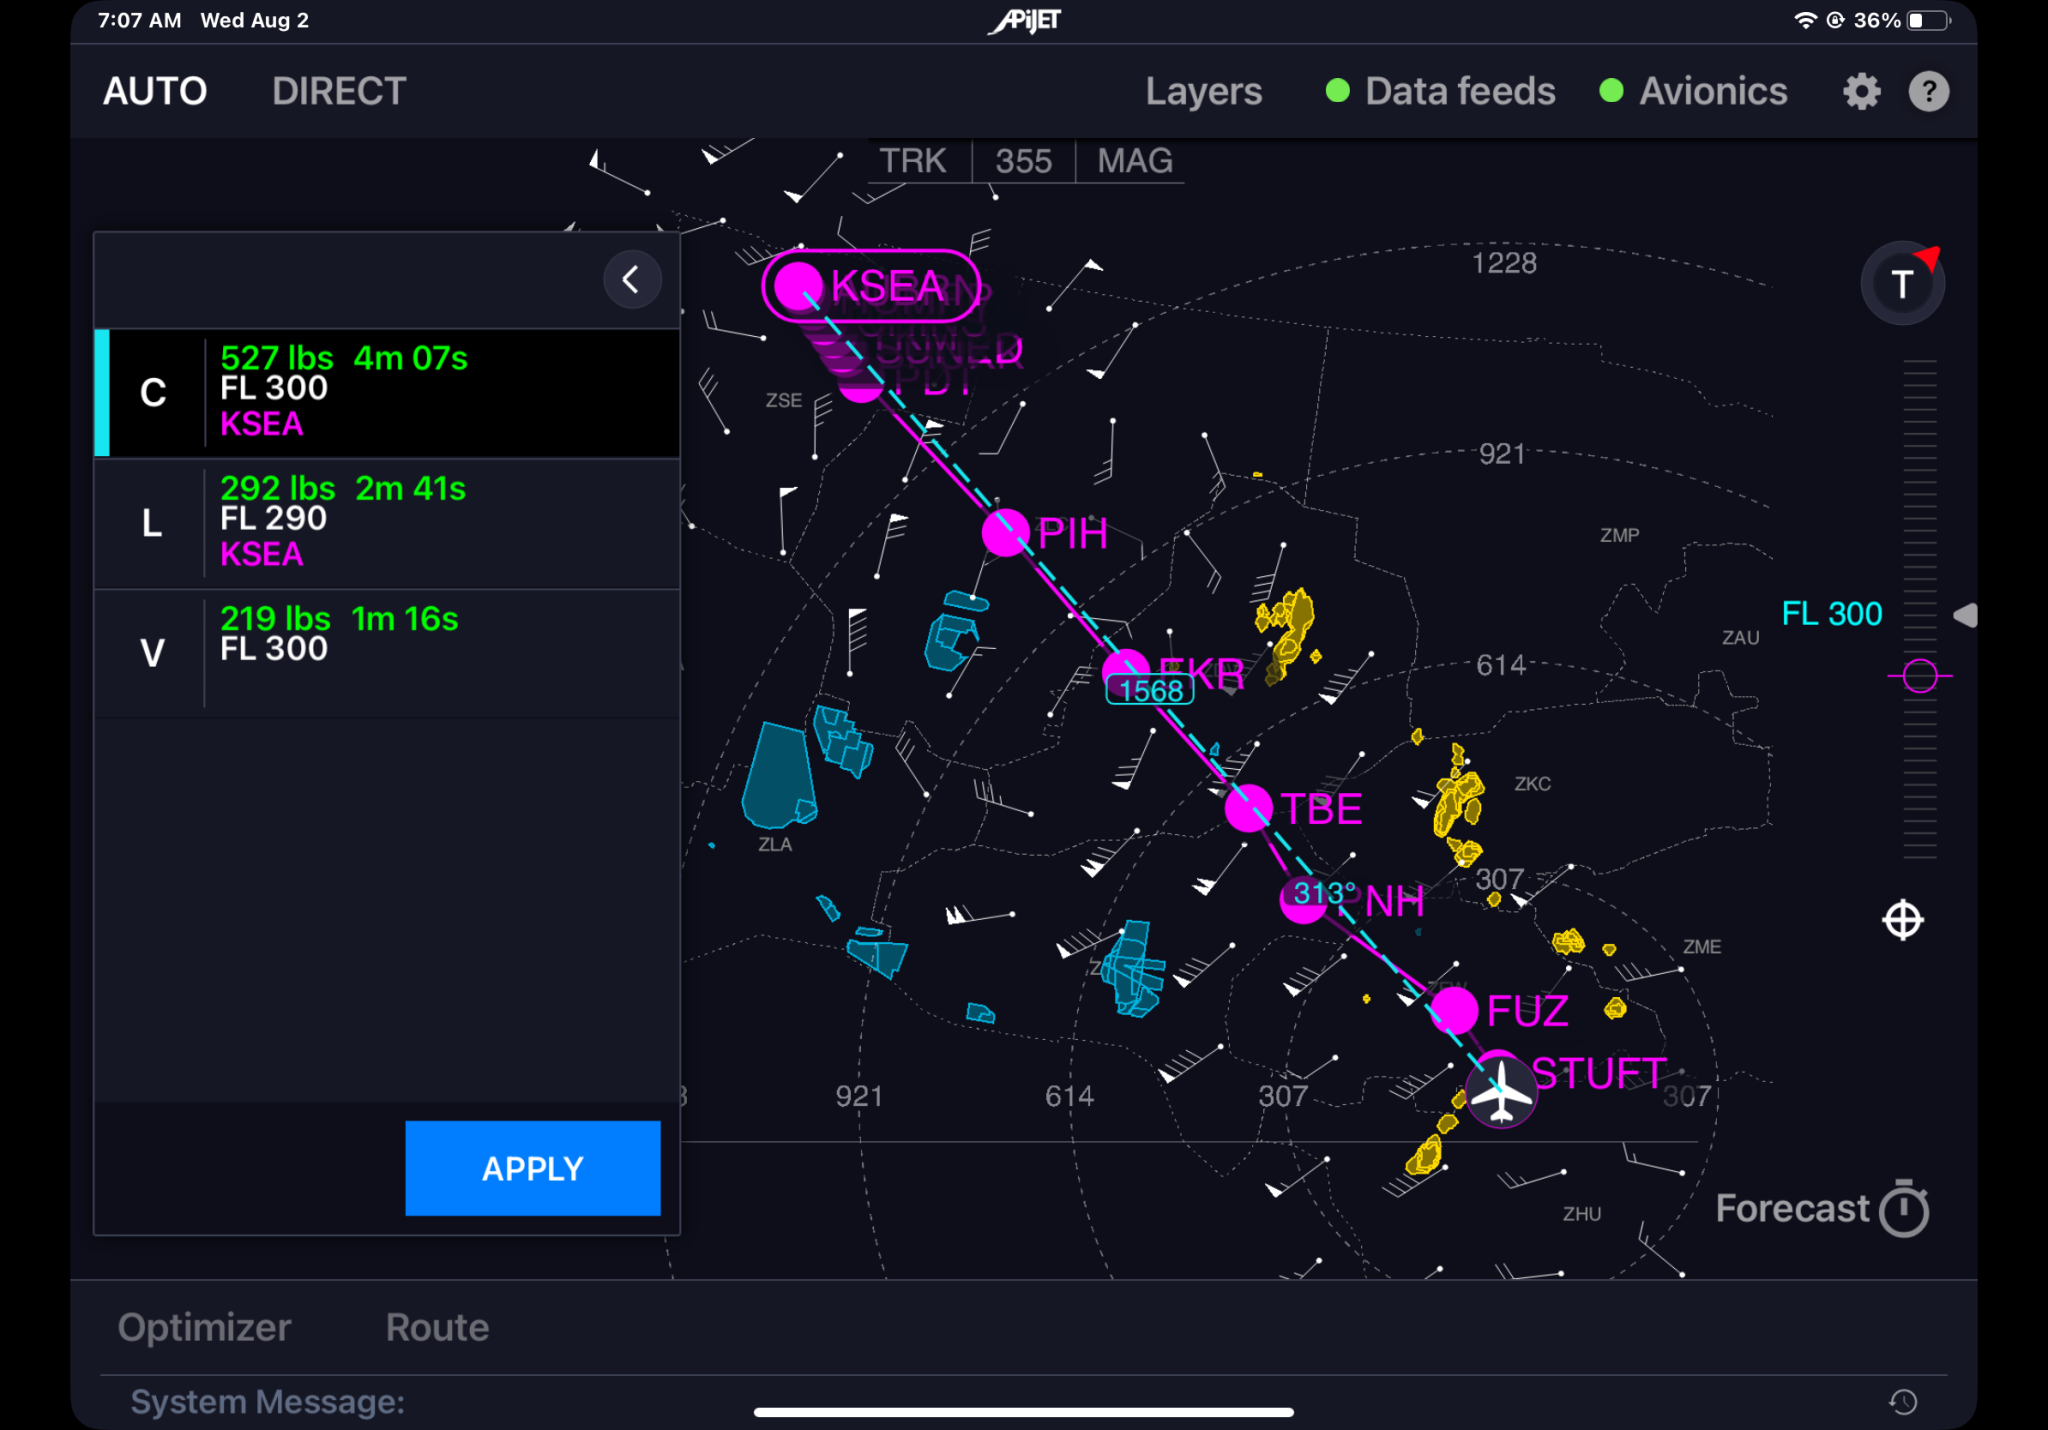 A screenshot of the APiJET Digital Winglets software.